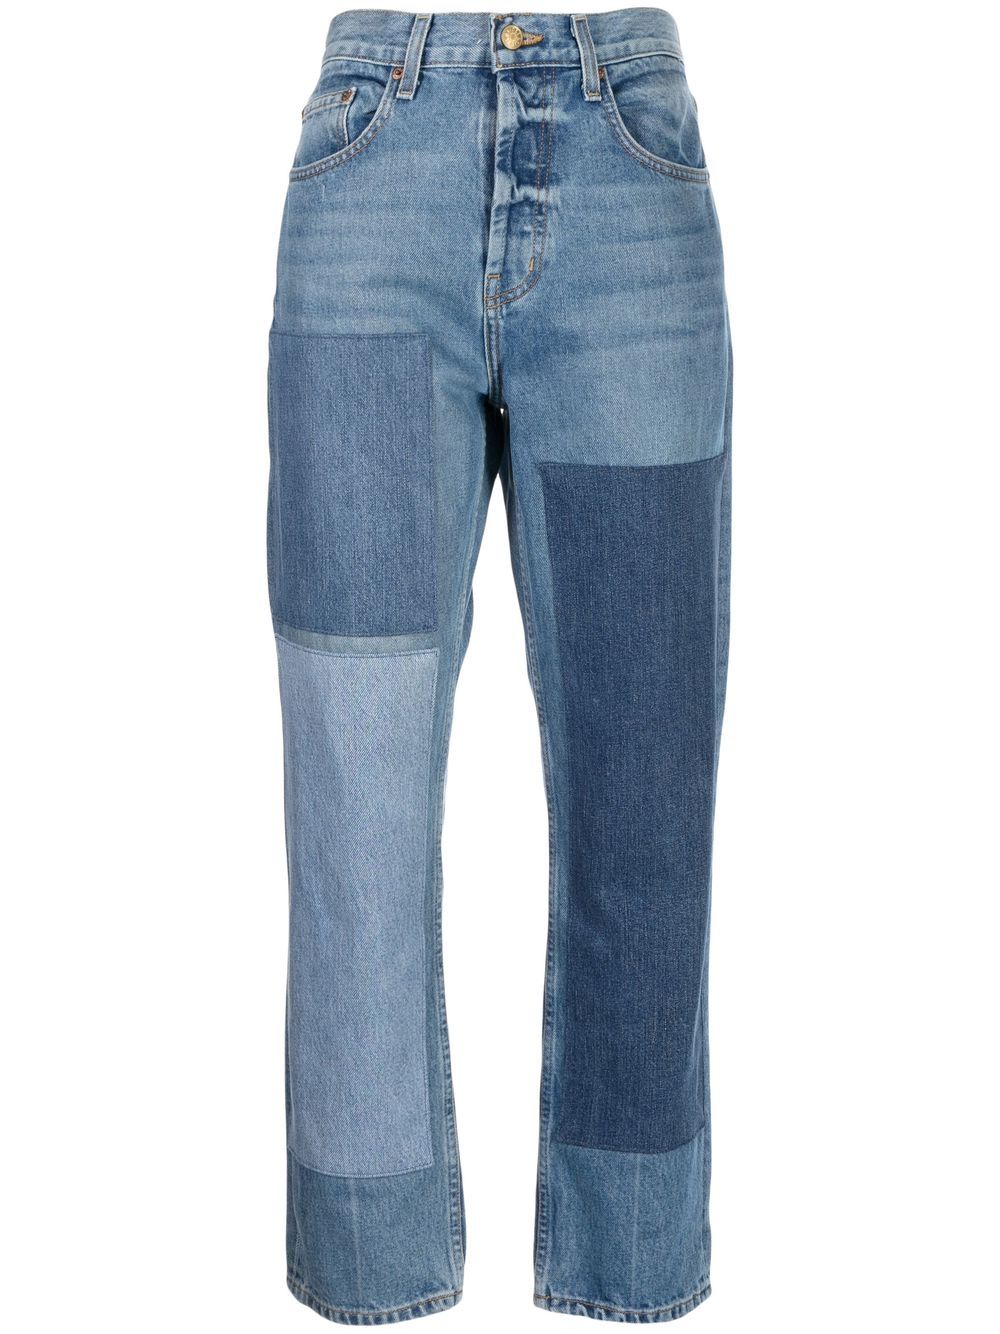 B SIDES patchwork denim jeans